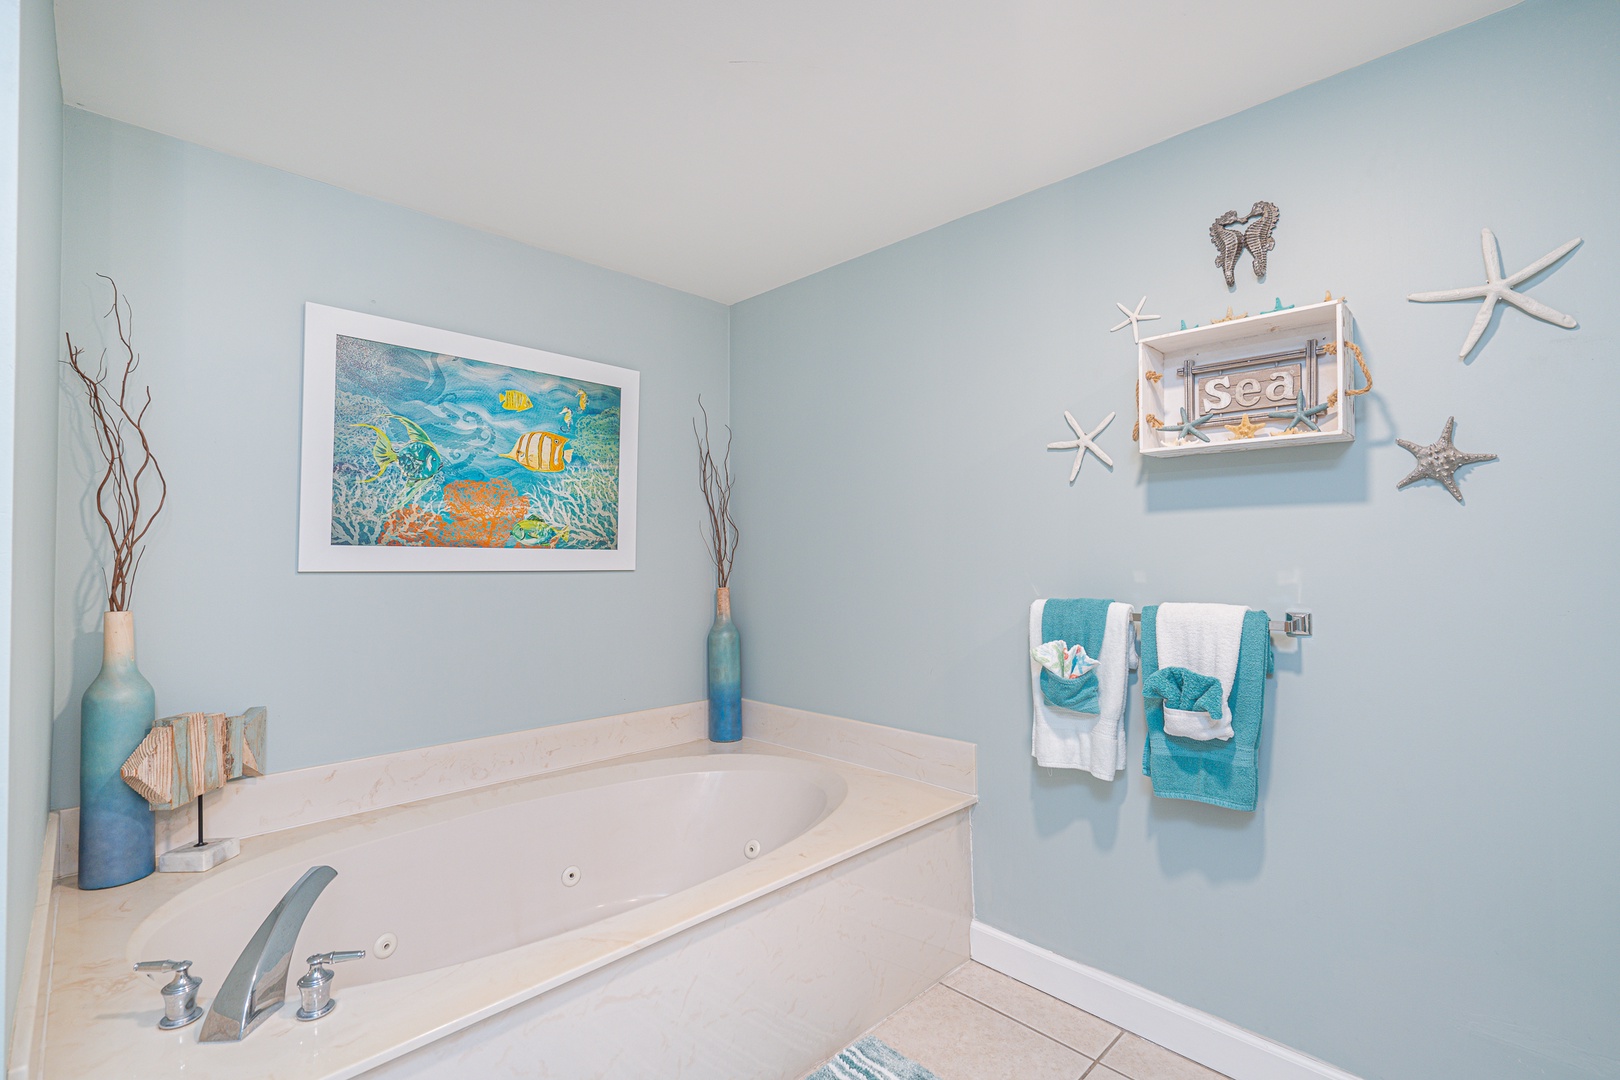 This ensuite bath features a single vanity, Jacuzzi tub, & glass shower